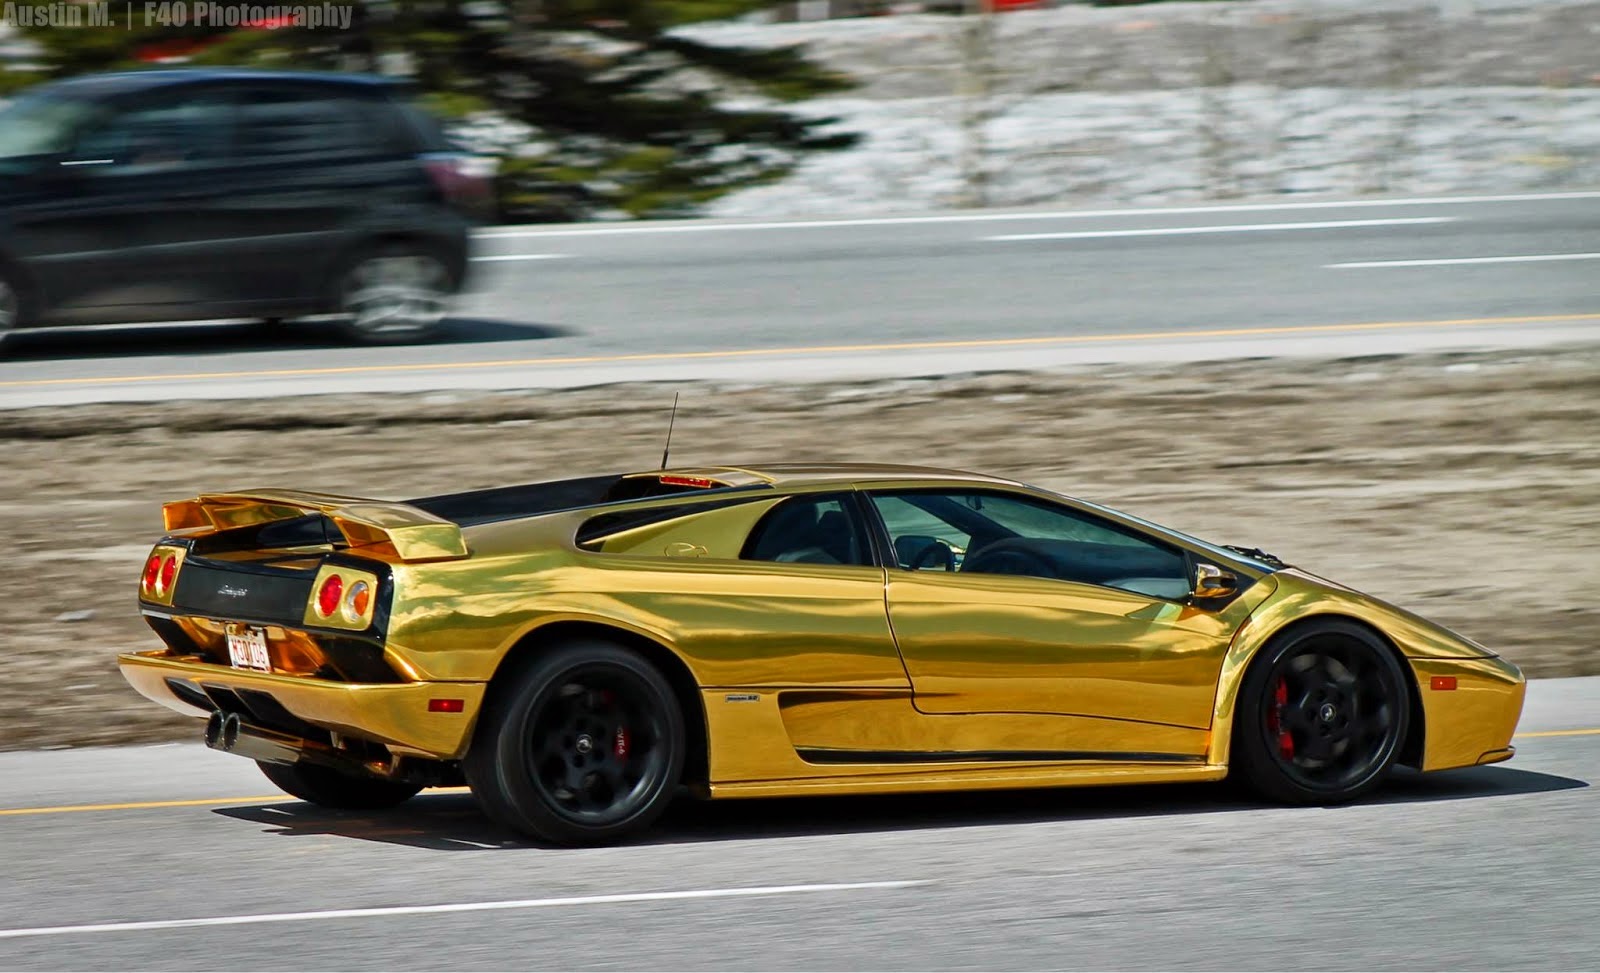 Tunned Ferrari F40 & The Gold Lamborghini Diablo Spotted ...